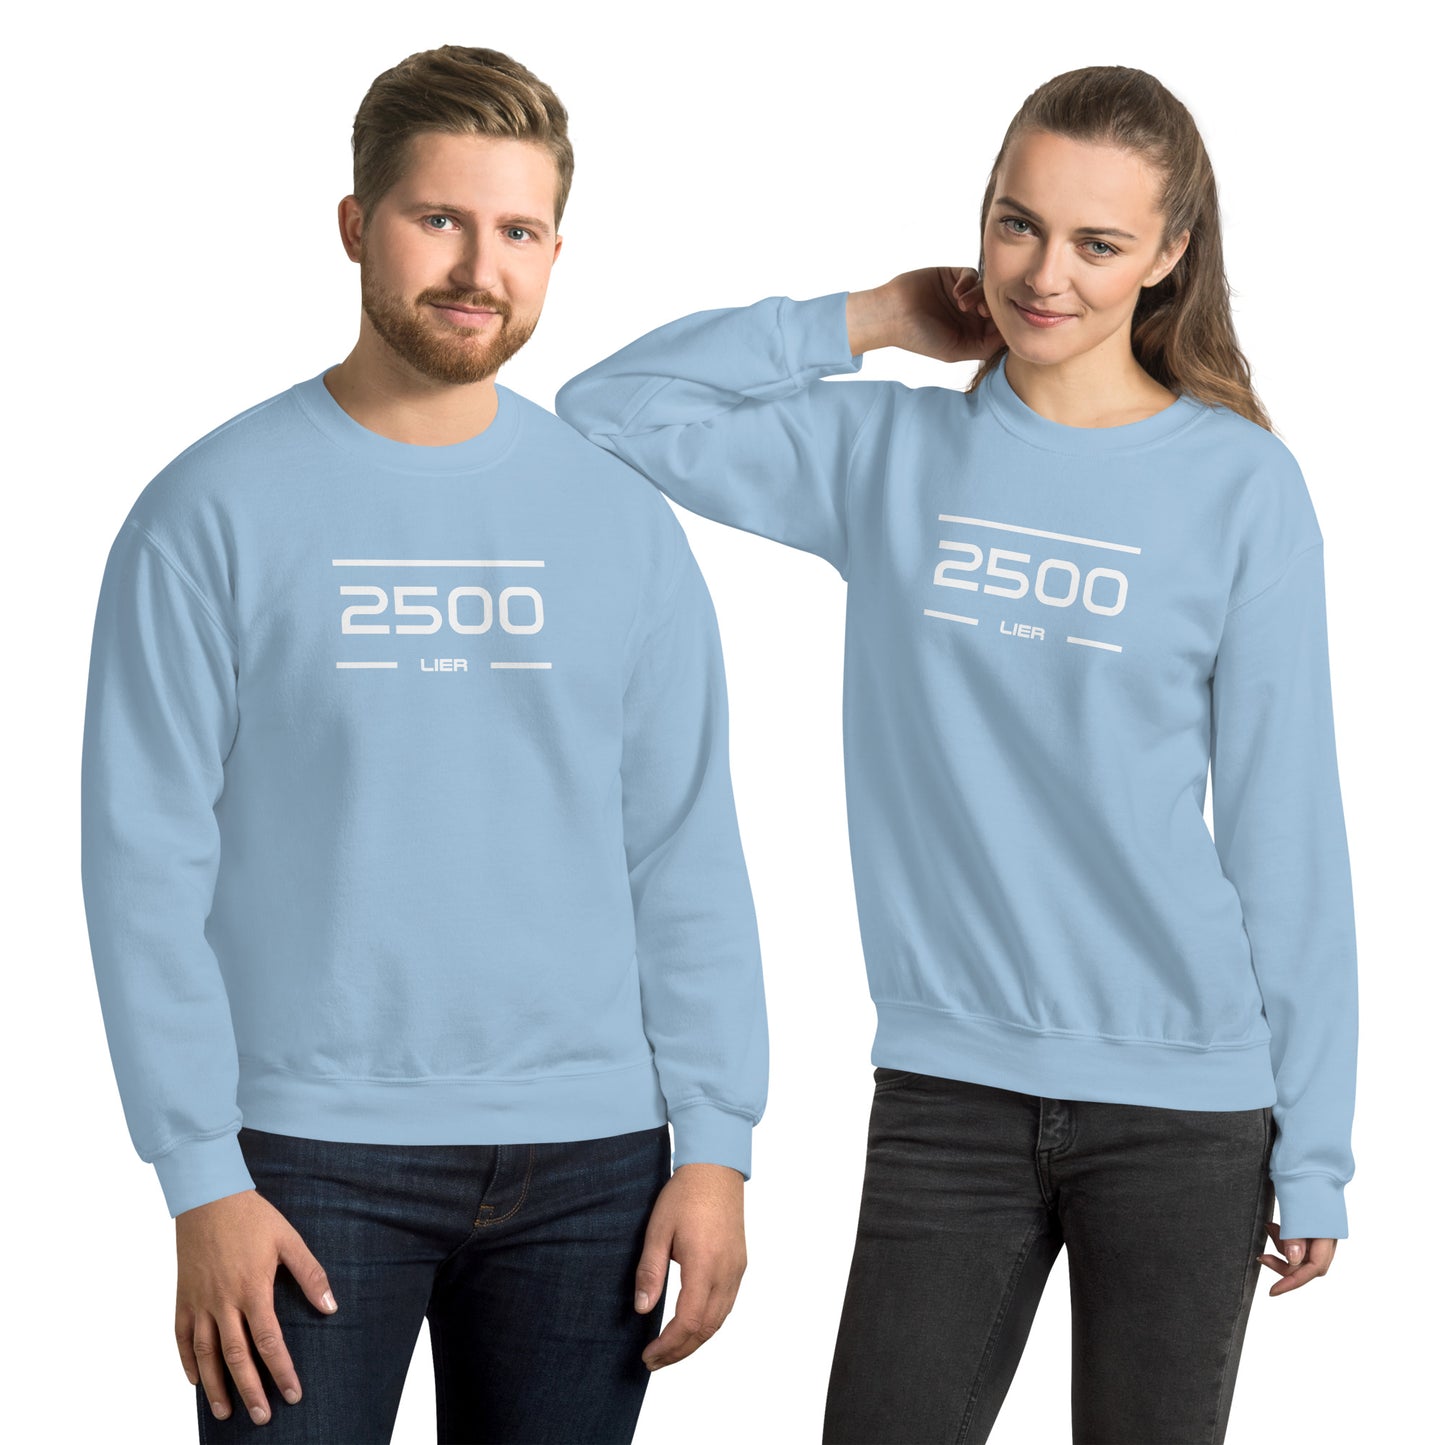 Sweater - 2500 - Lier (M/V)